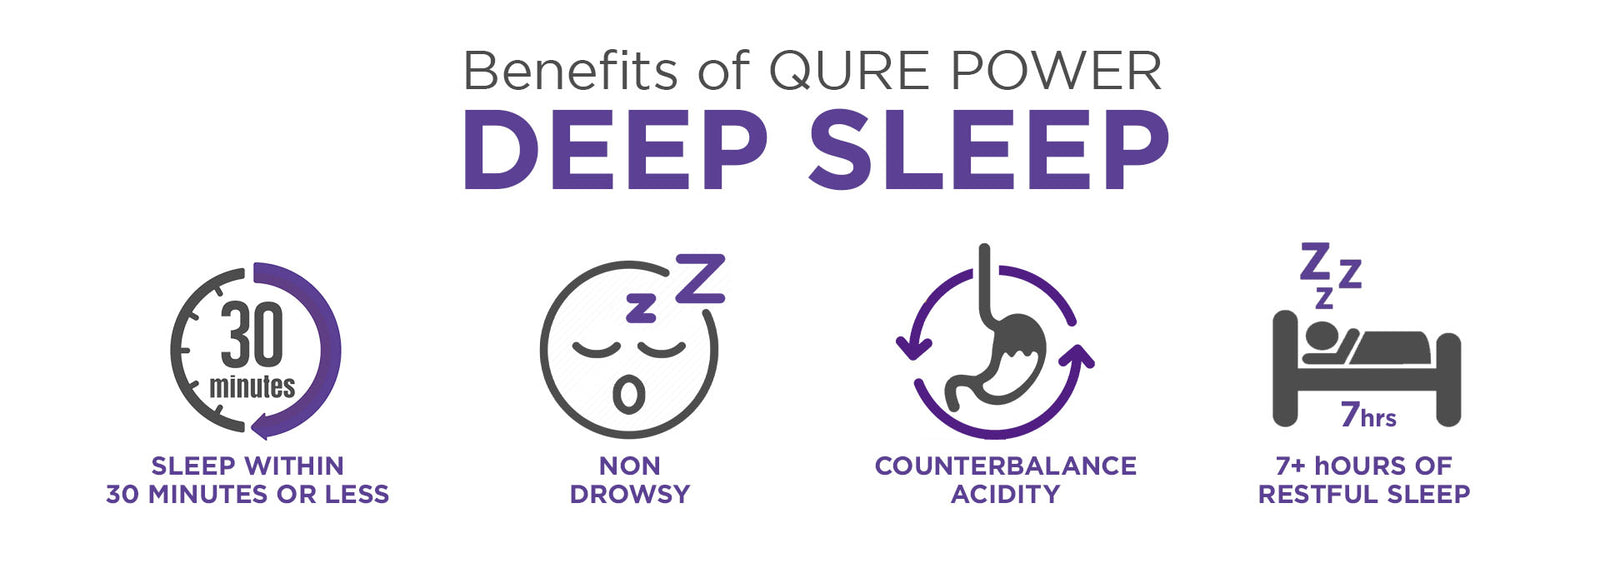 Benefits of QURE power Deep sleep